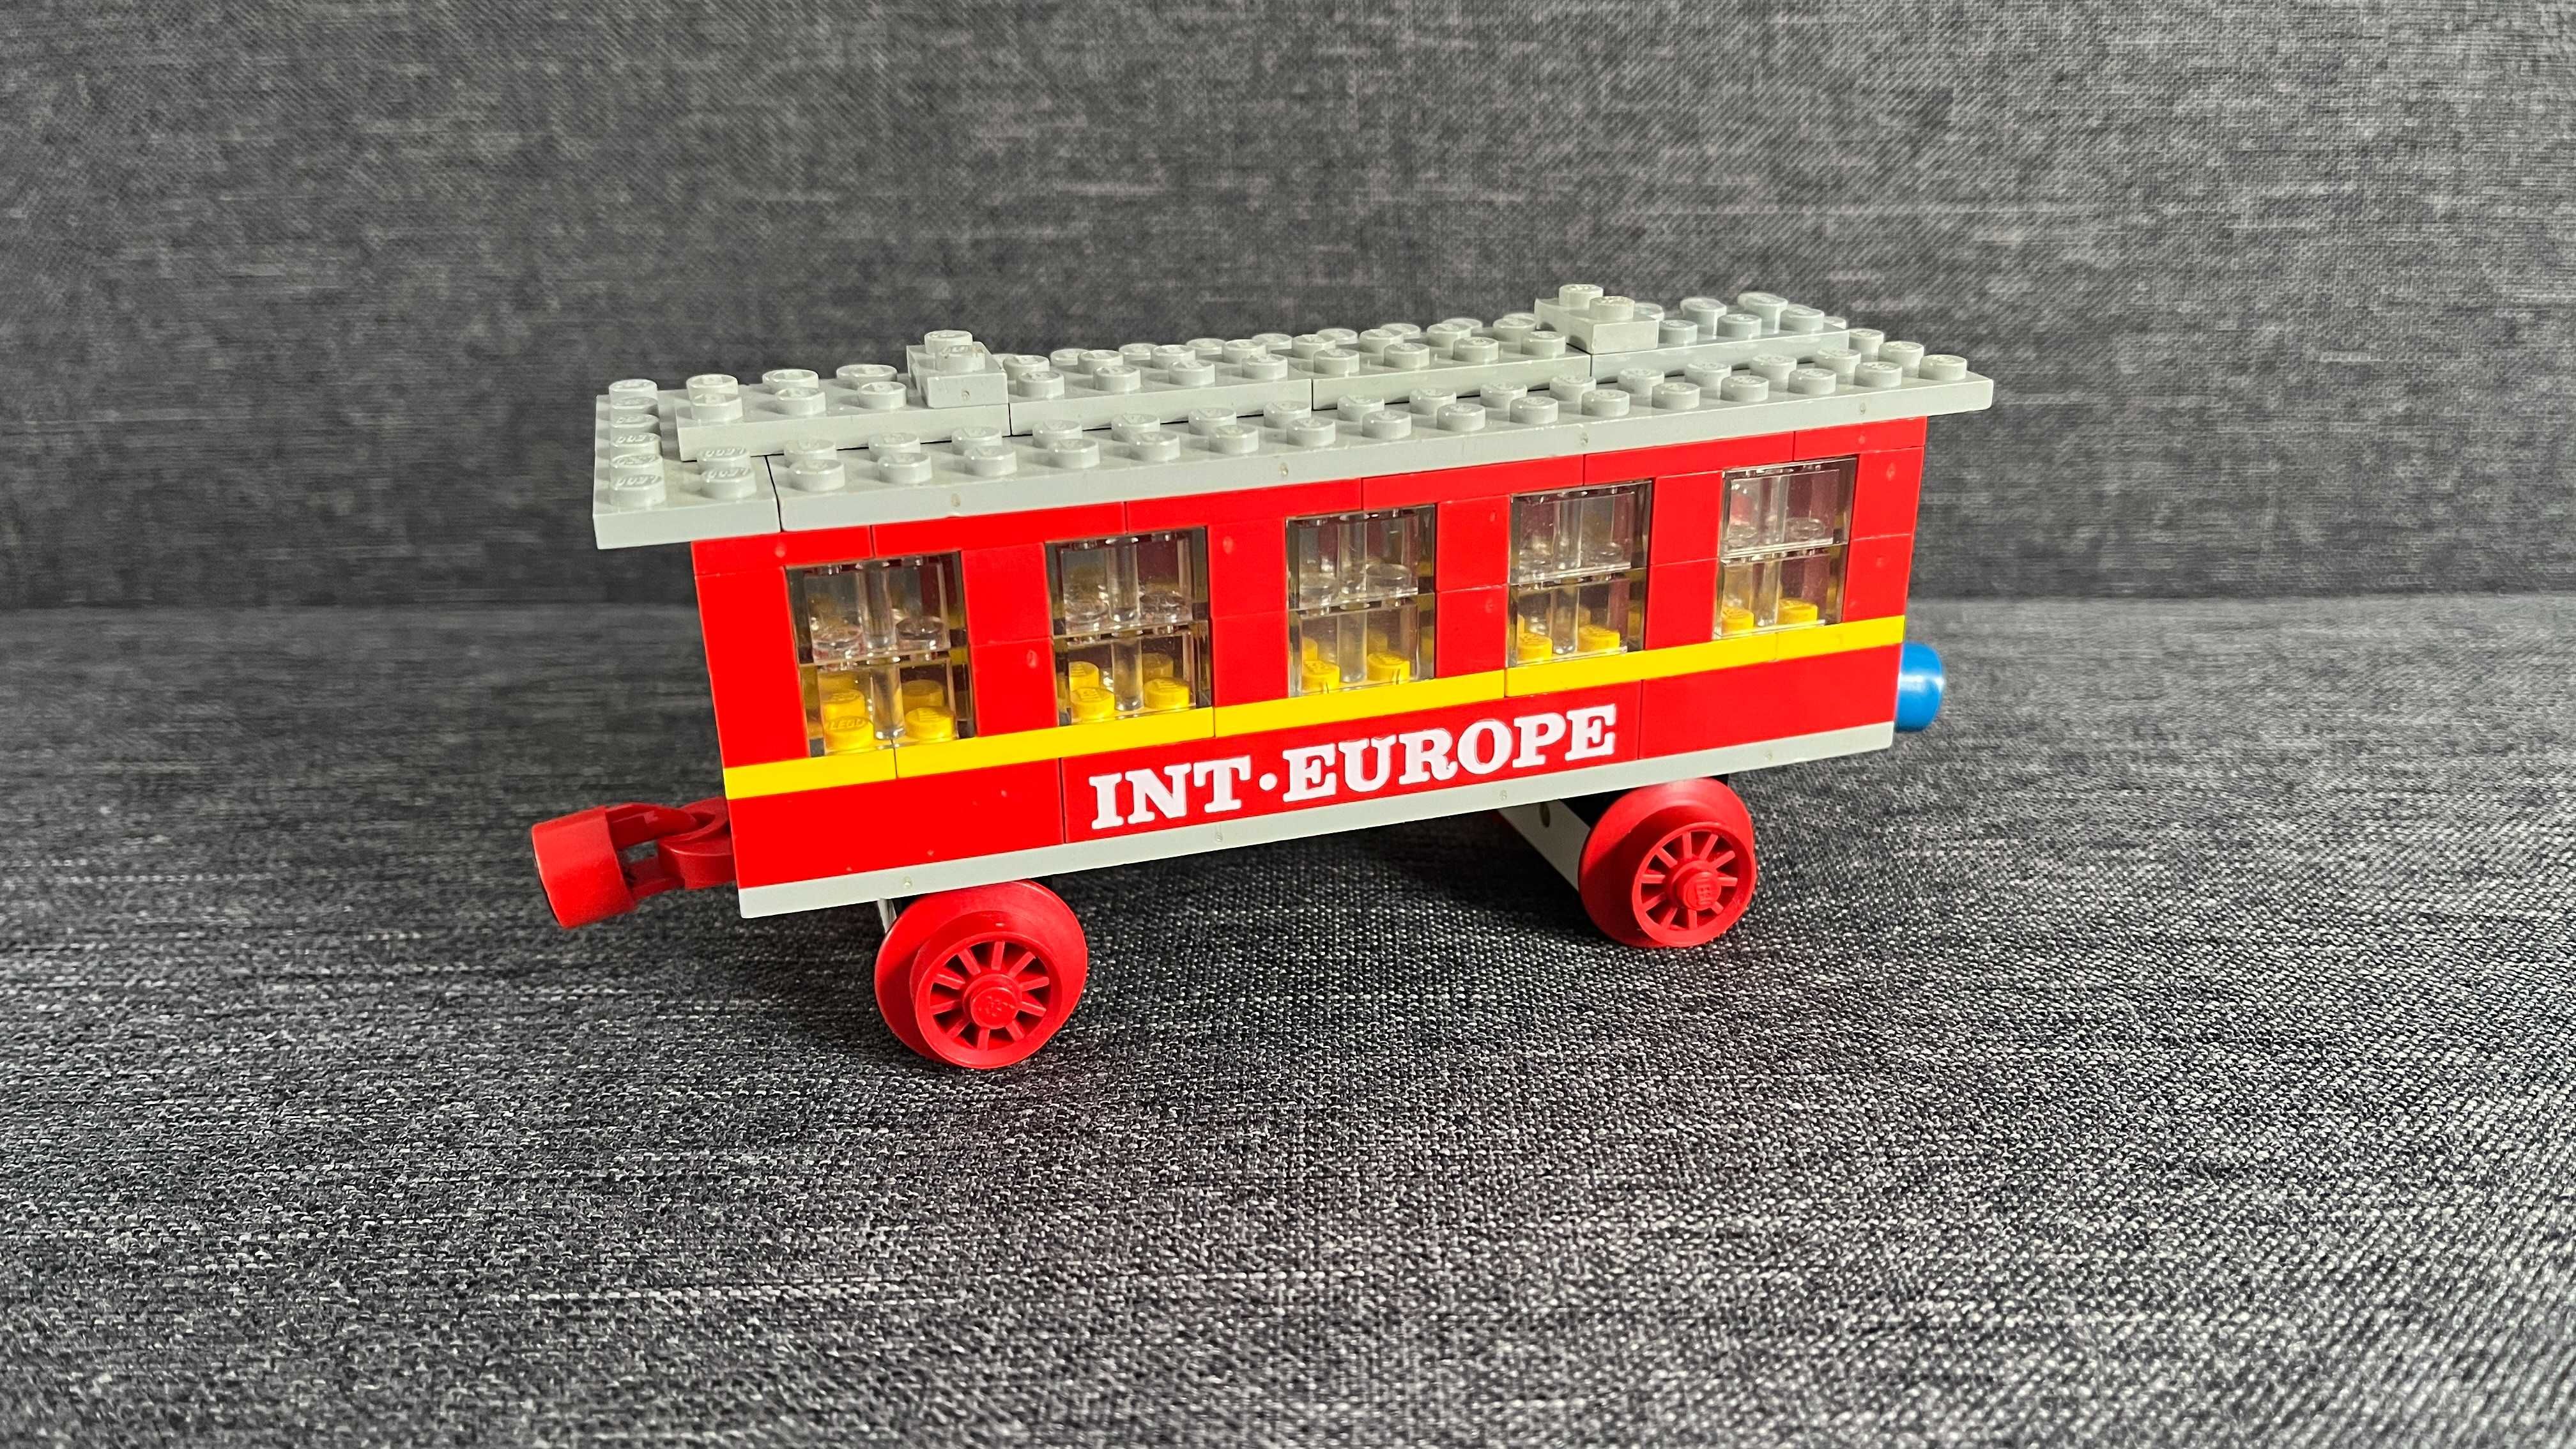 Lego Trains - seturi complete trenuri anii 80